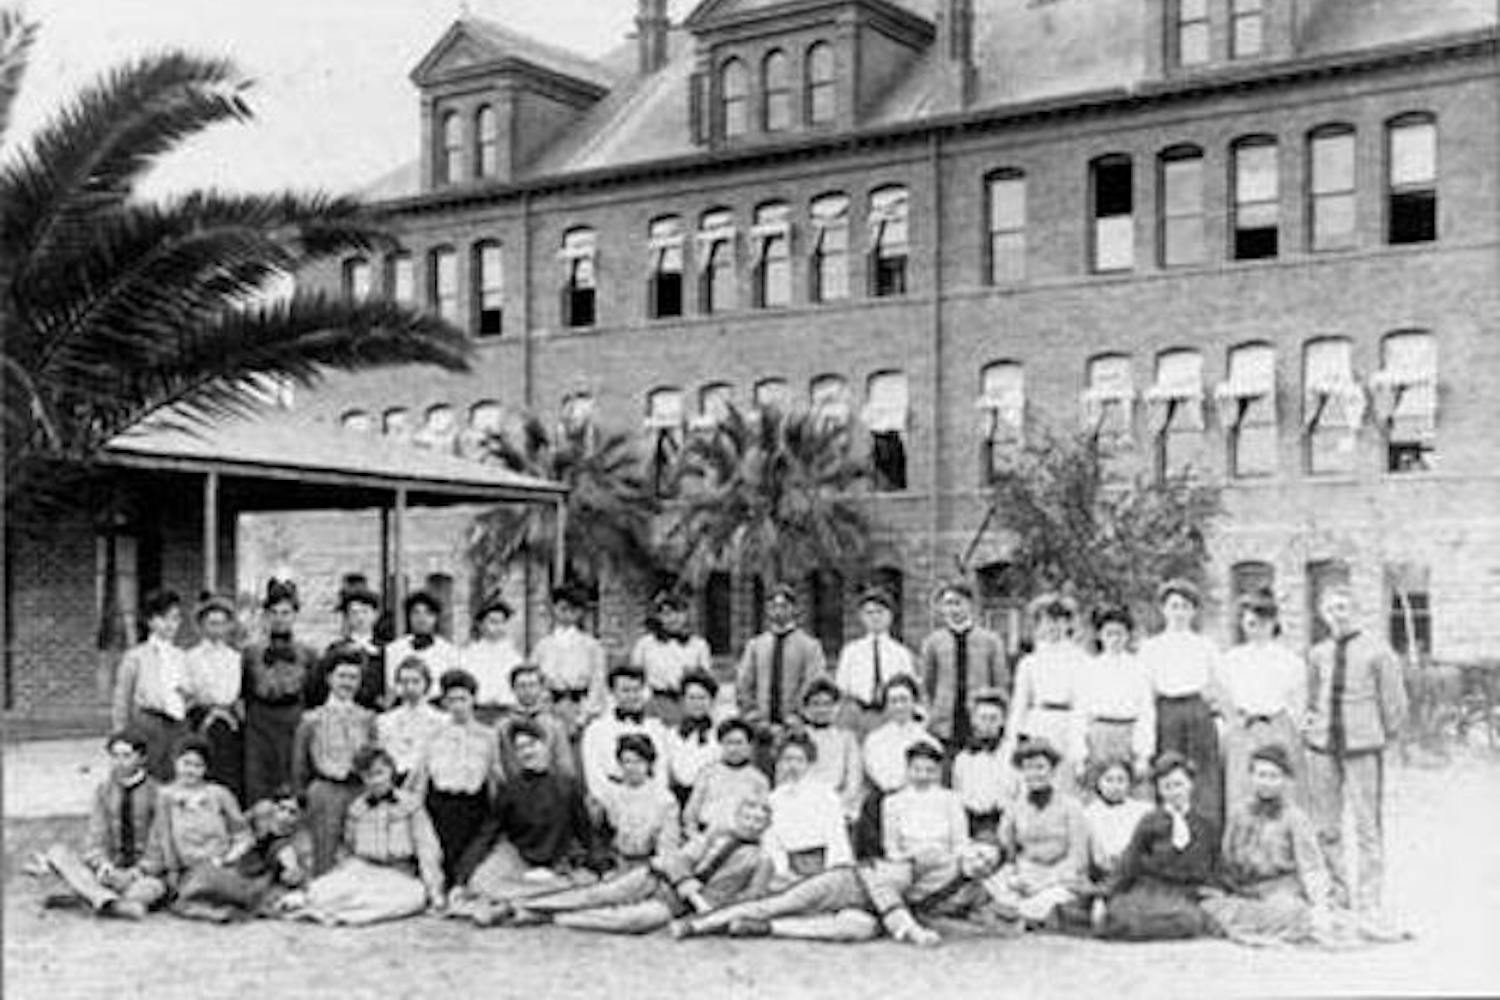 Class portrait in front of Old Main in the original Normal School Building, taken in 1901.